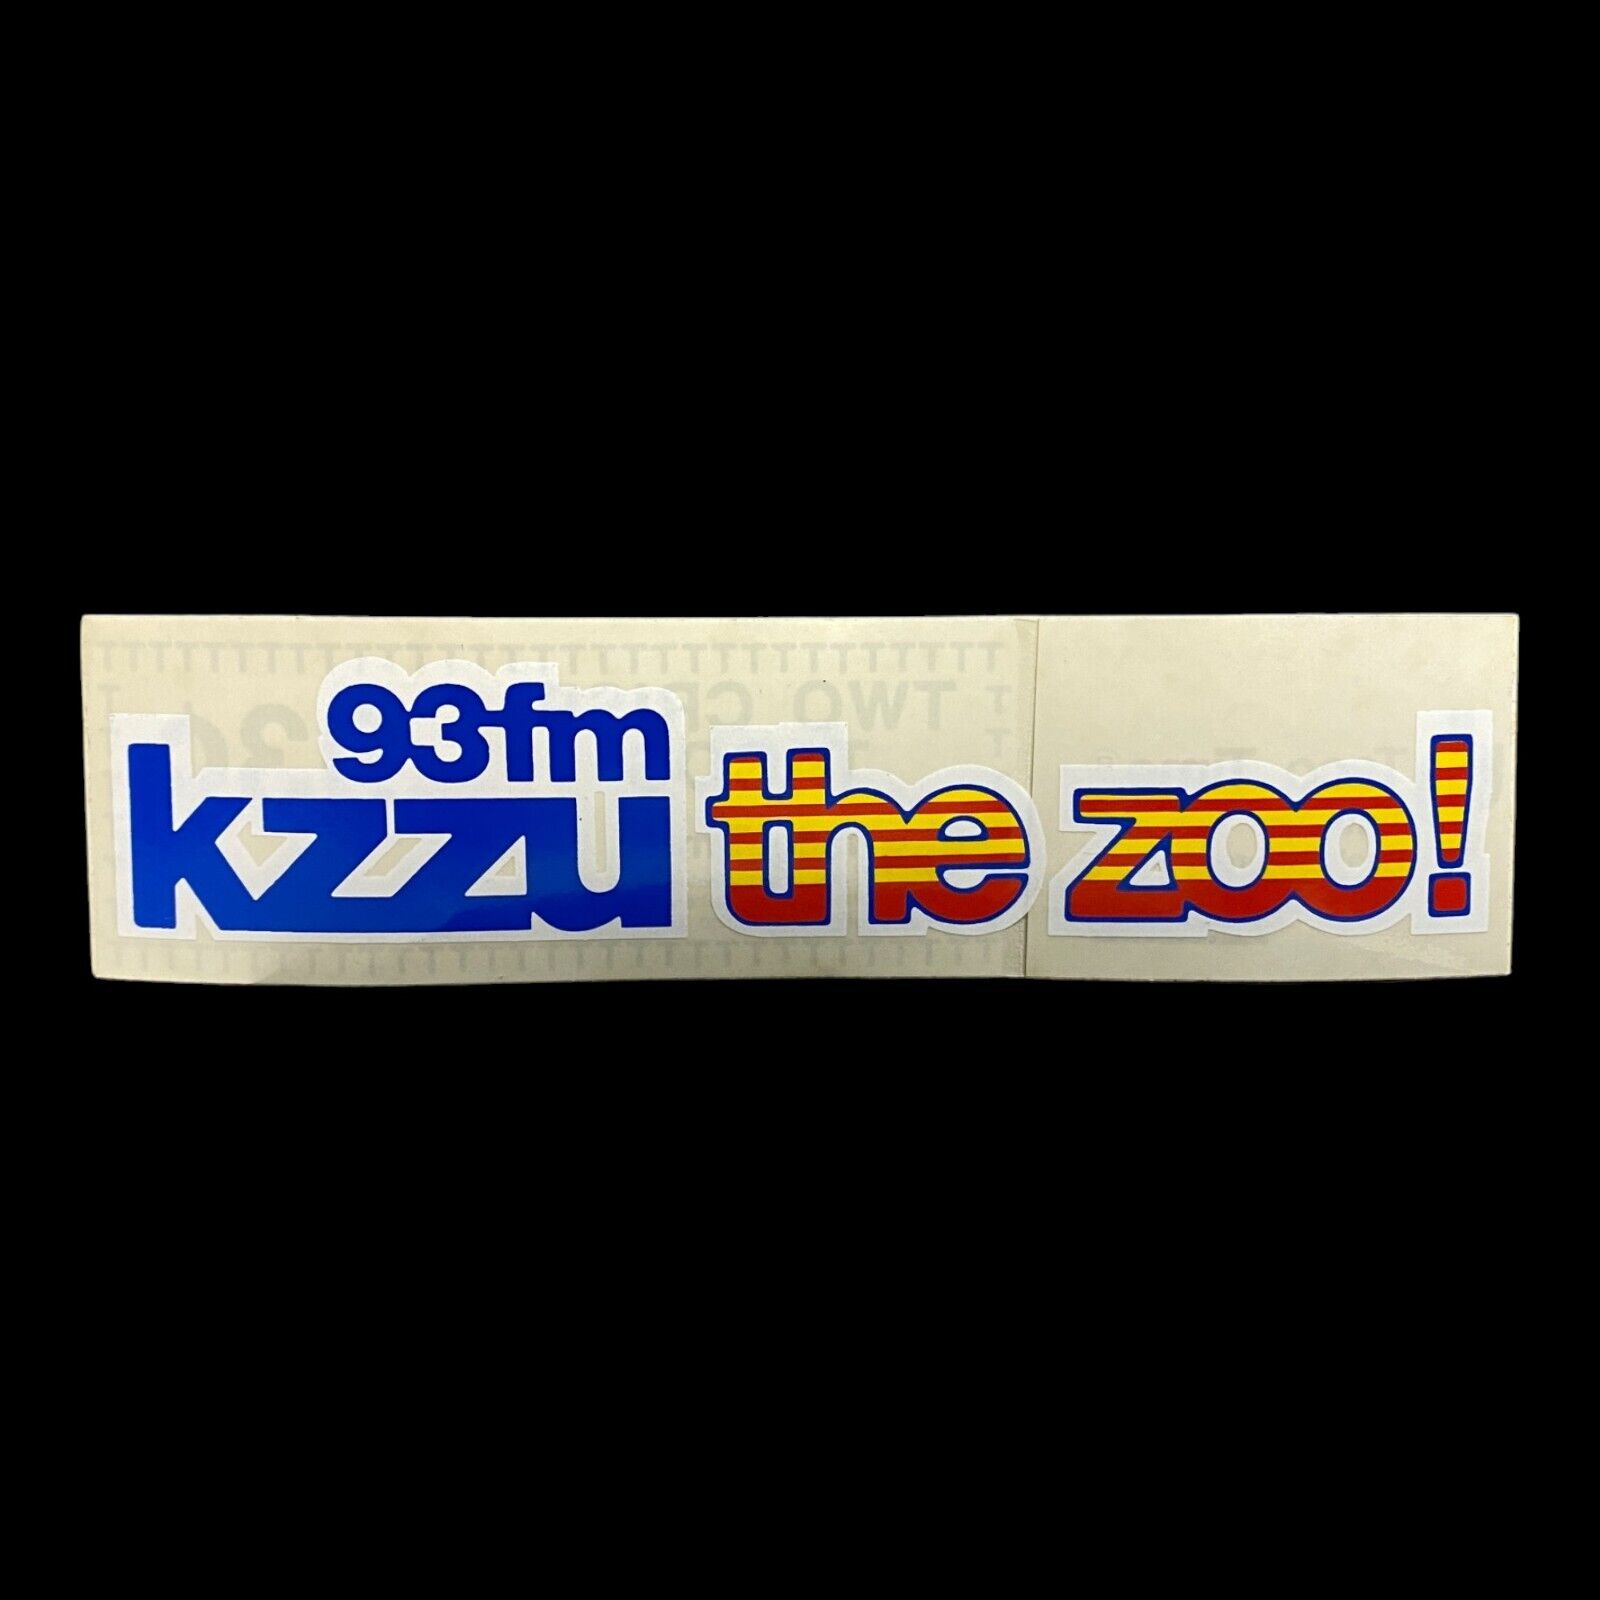 1988 VINTAGE 93 fm kzzu the zoo RADIO STATION BUMPER STICKER SPOKANE, WA